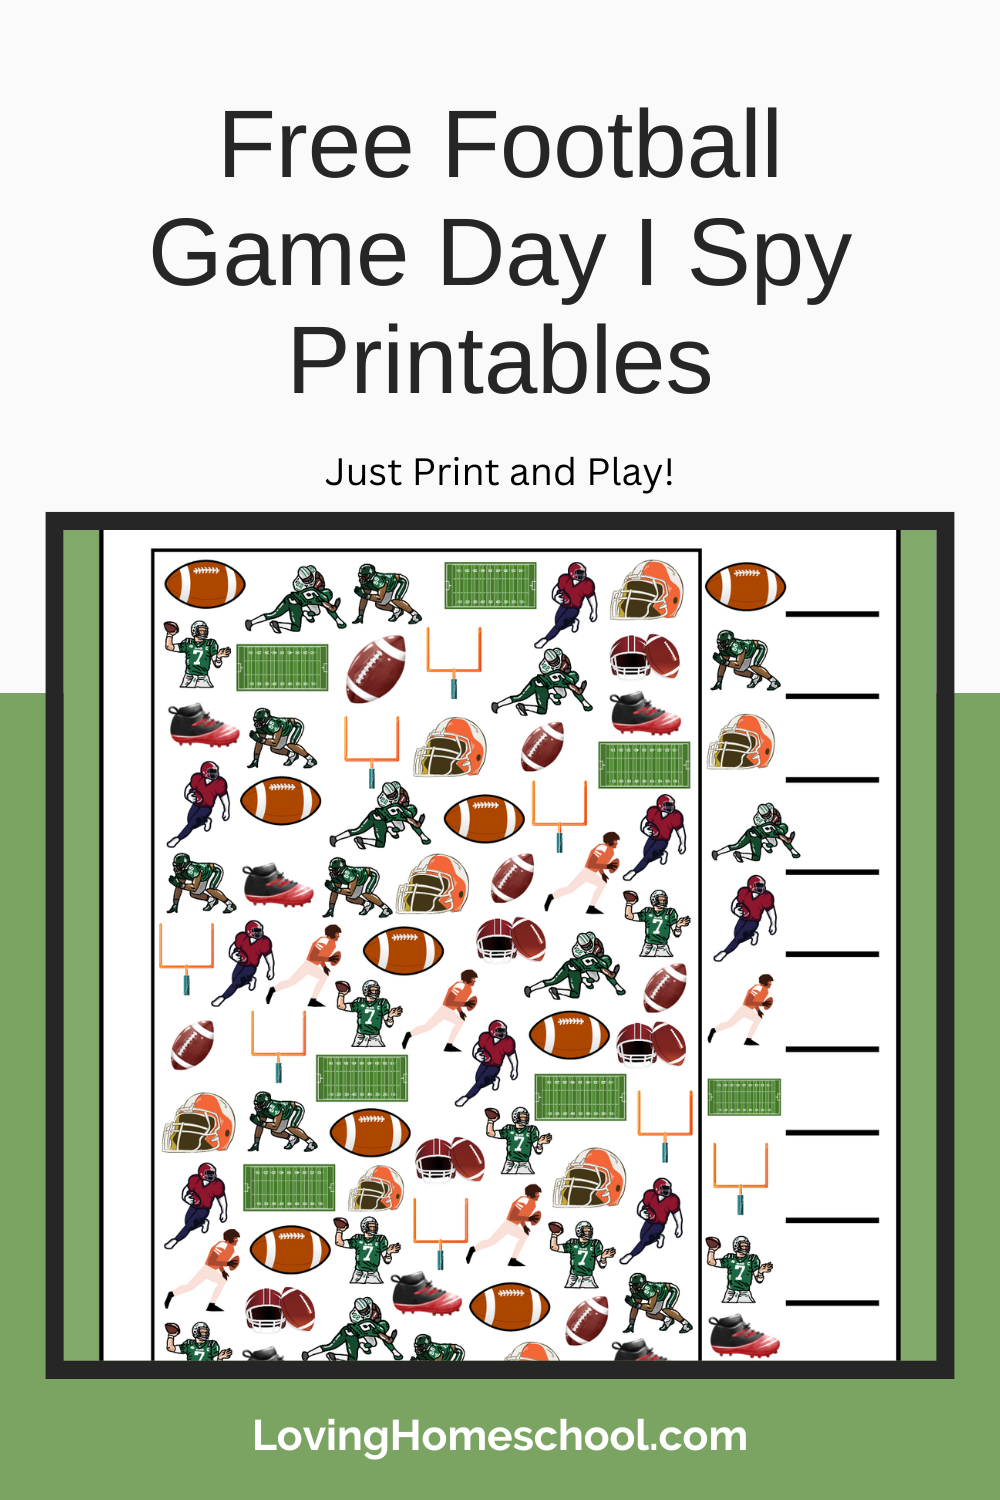 Free Football Game Day I Spy Printables Pinterest Pin